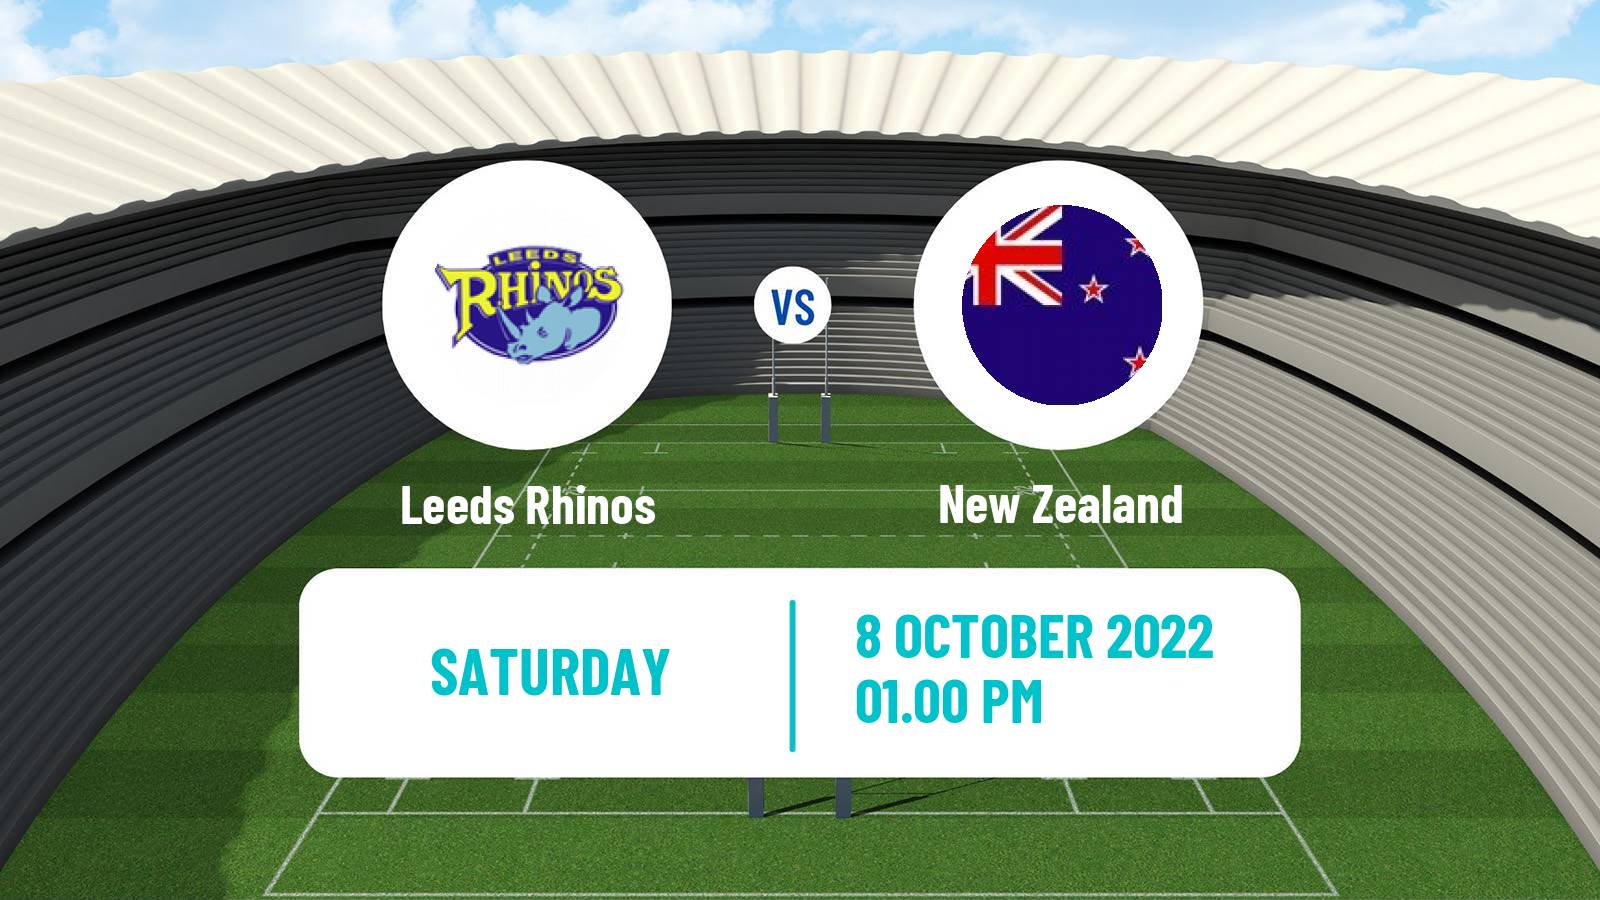 Rugby league Club Friendly Rugby League Leeds Rhinos - New Zealand